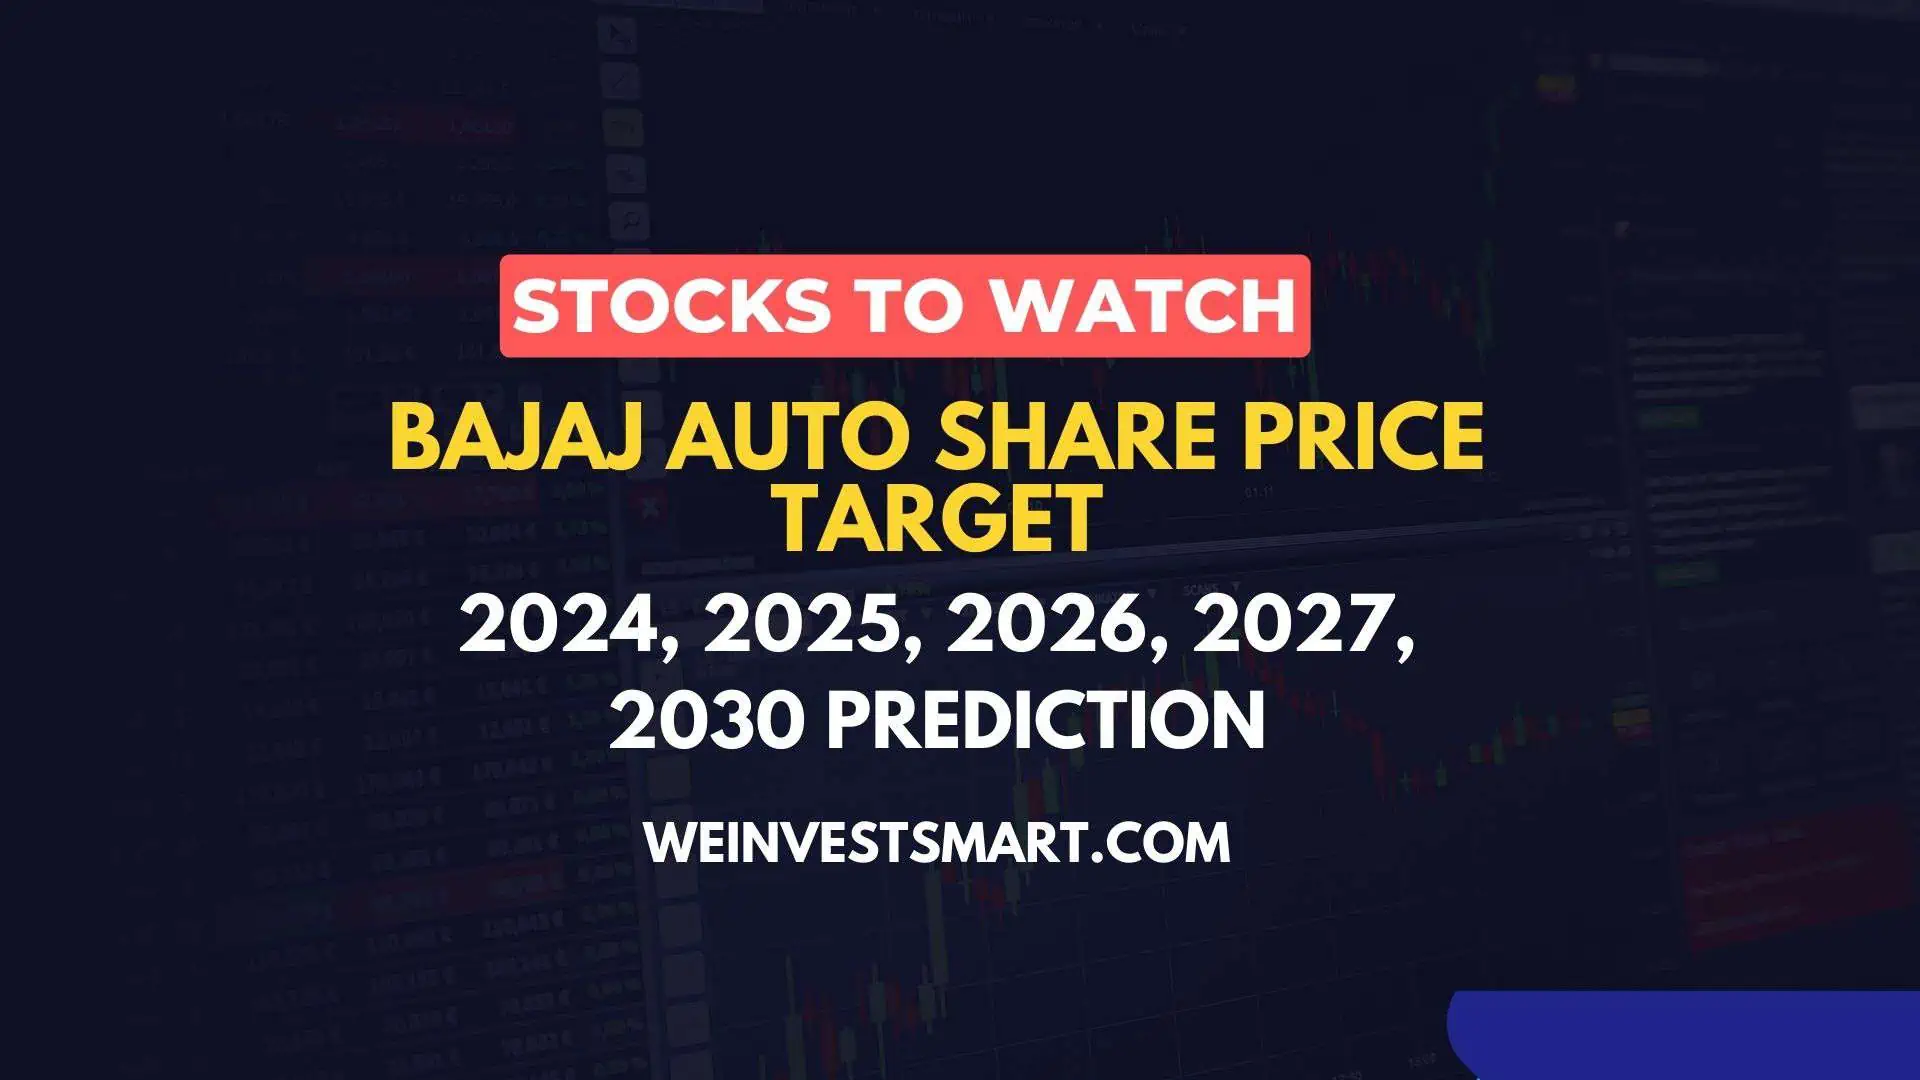 Bajaj Auto share price target 2024, 2025, 2026, 2027, 2030 prediction, Buy or Sell